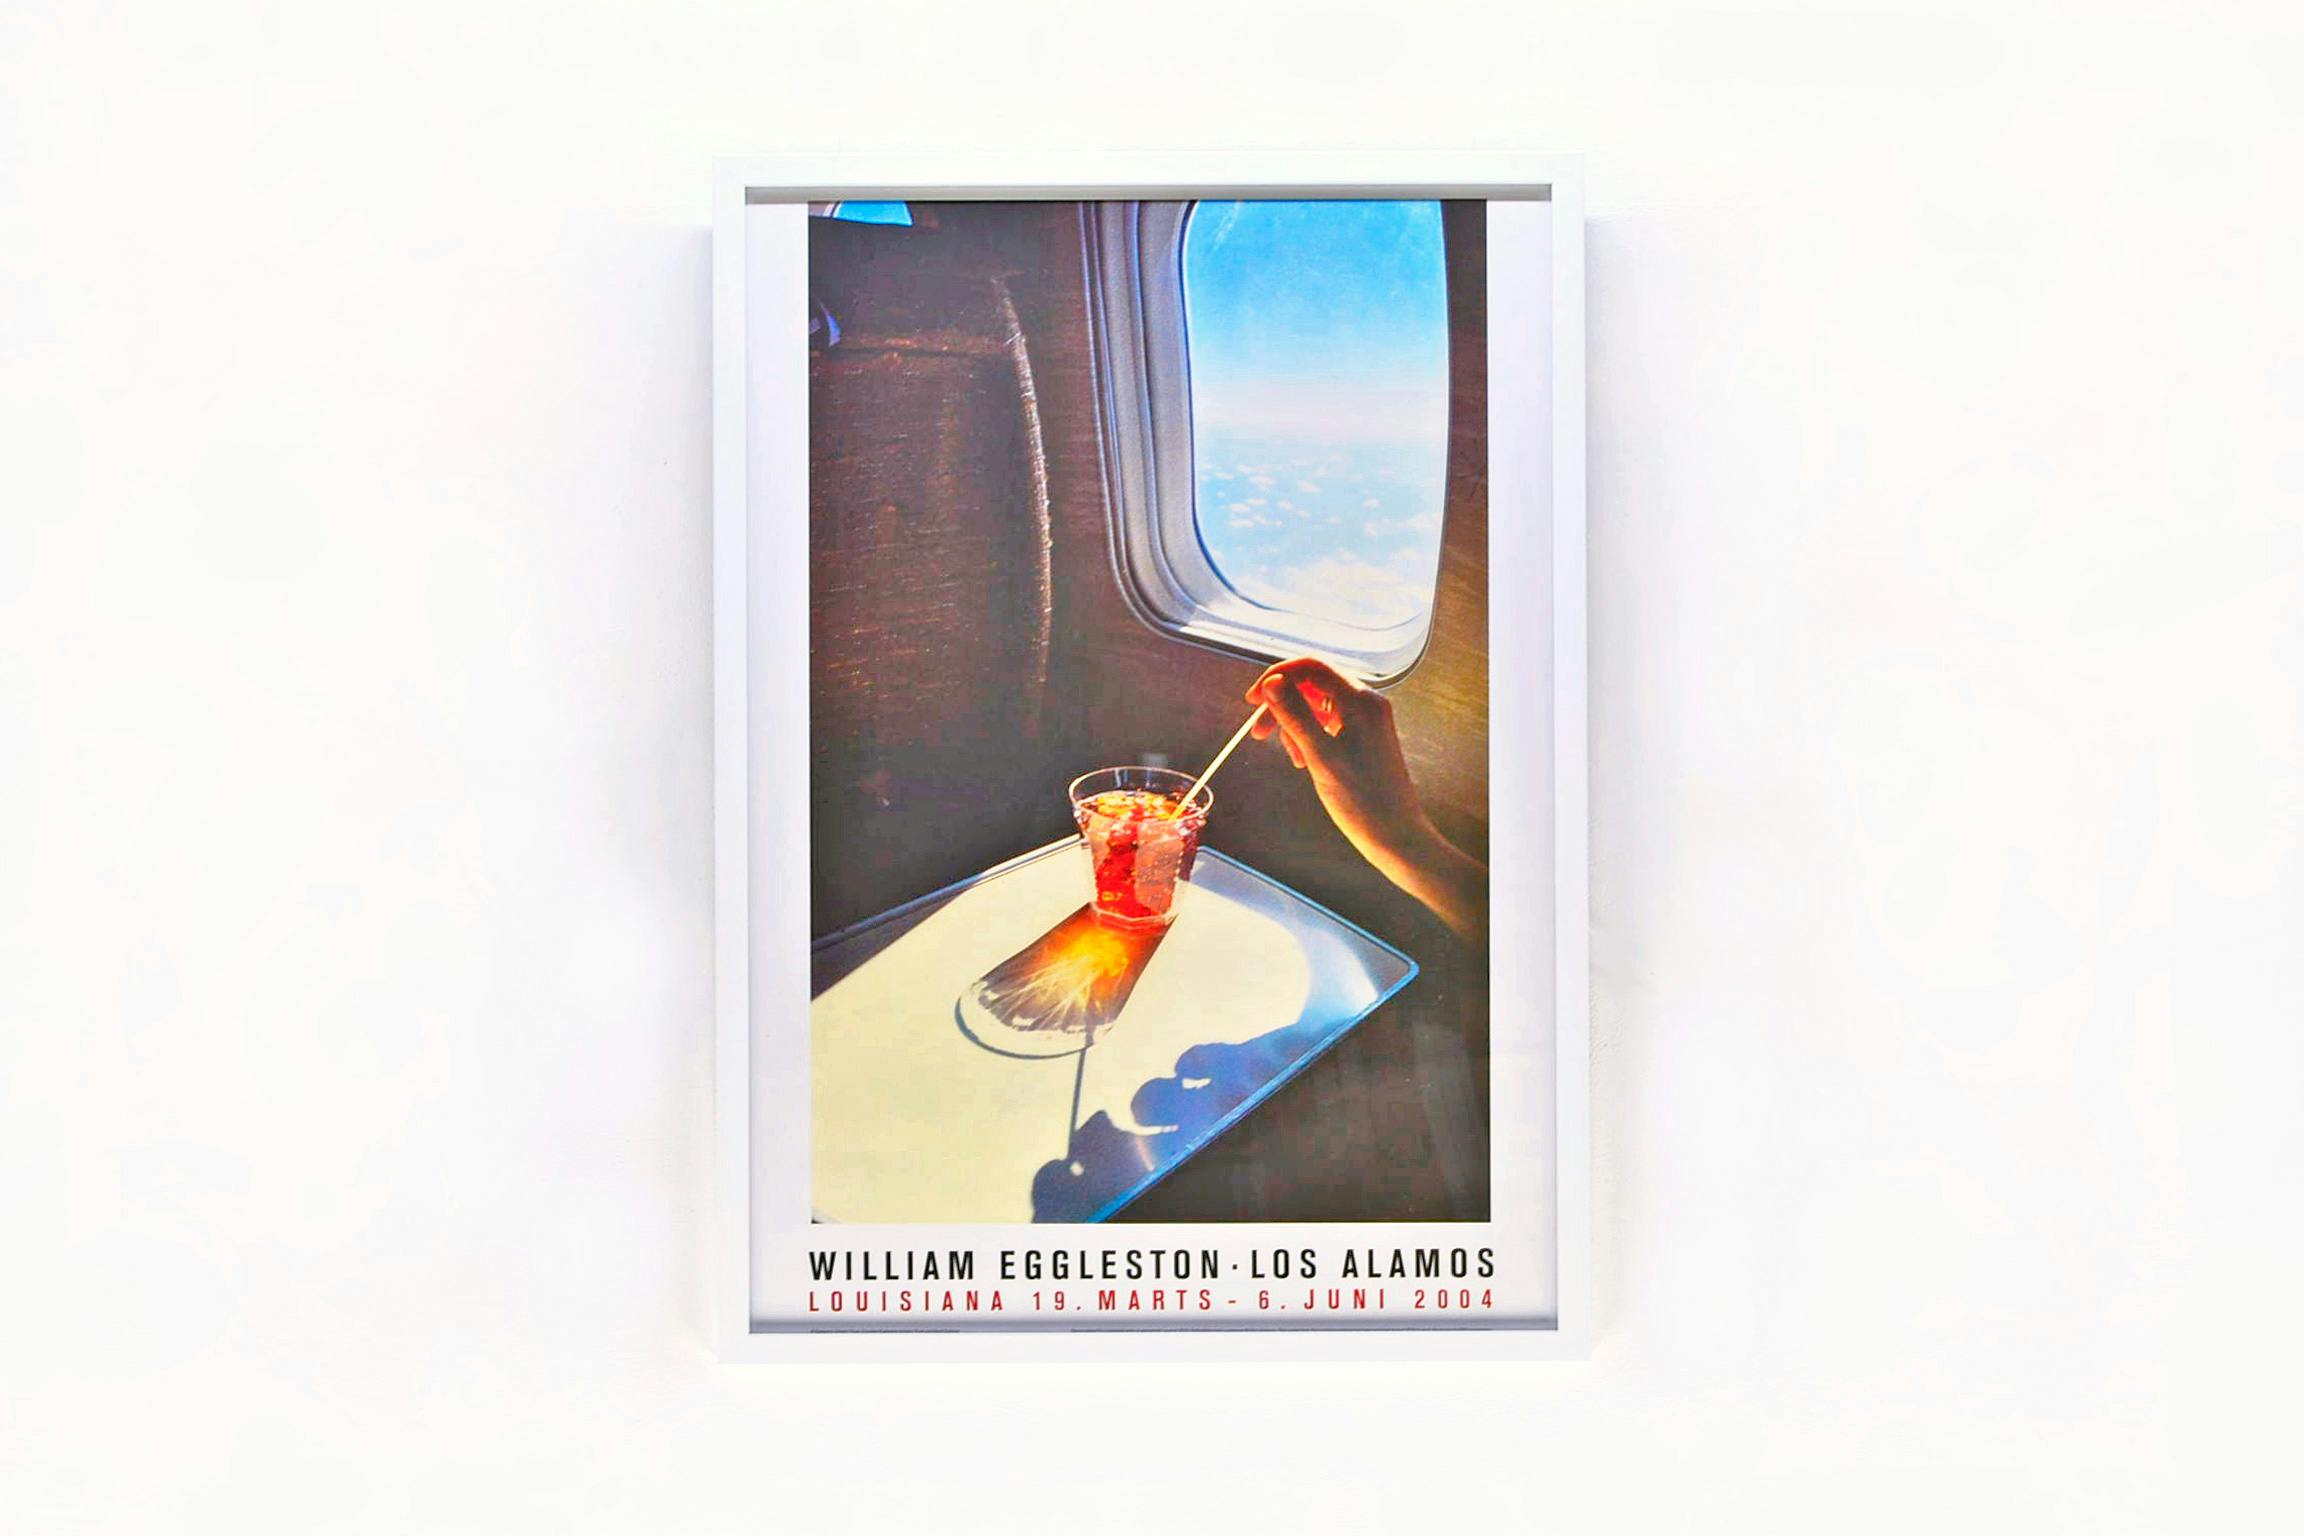 William Eggleston: Los Alamos ポスター